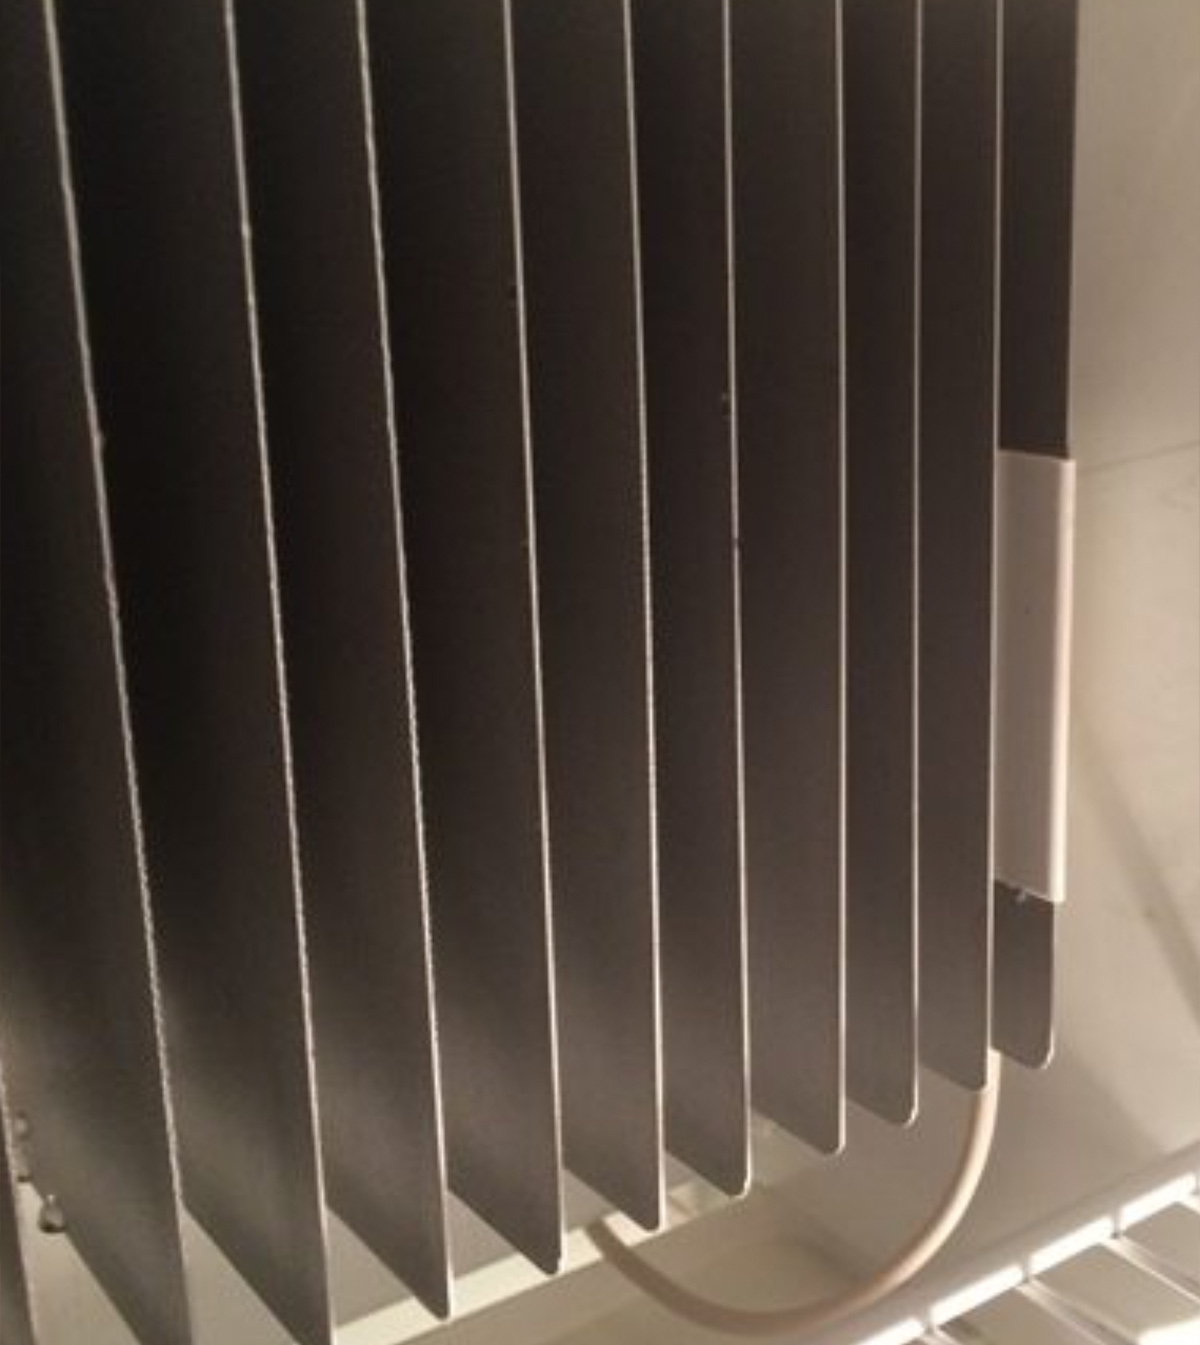 an RV cooling exhaust fan